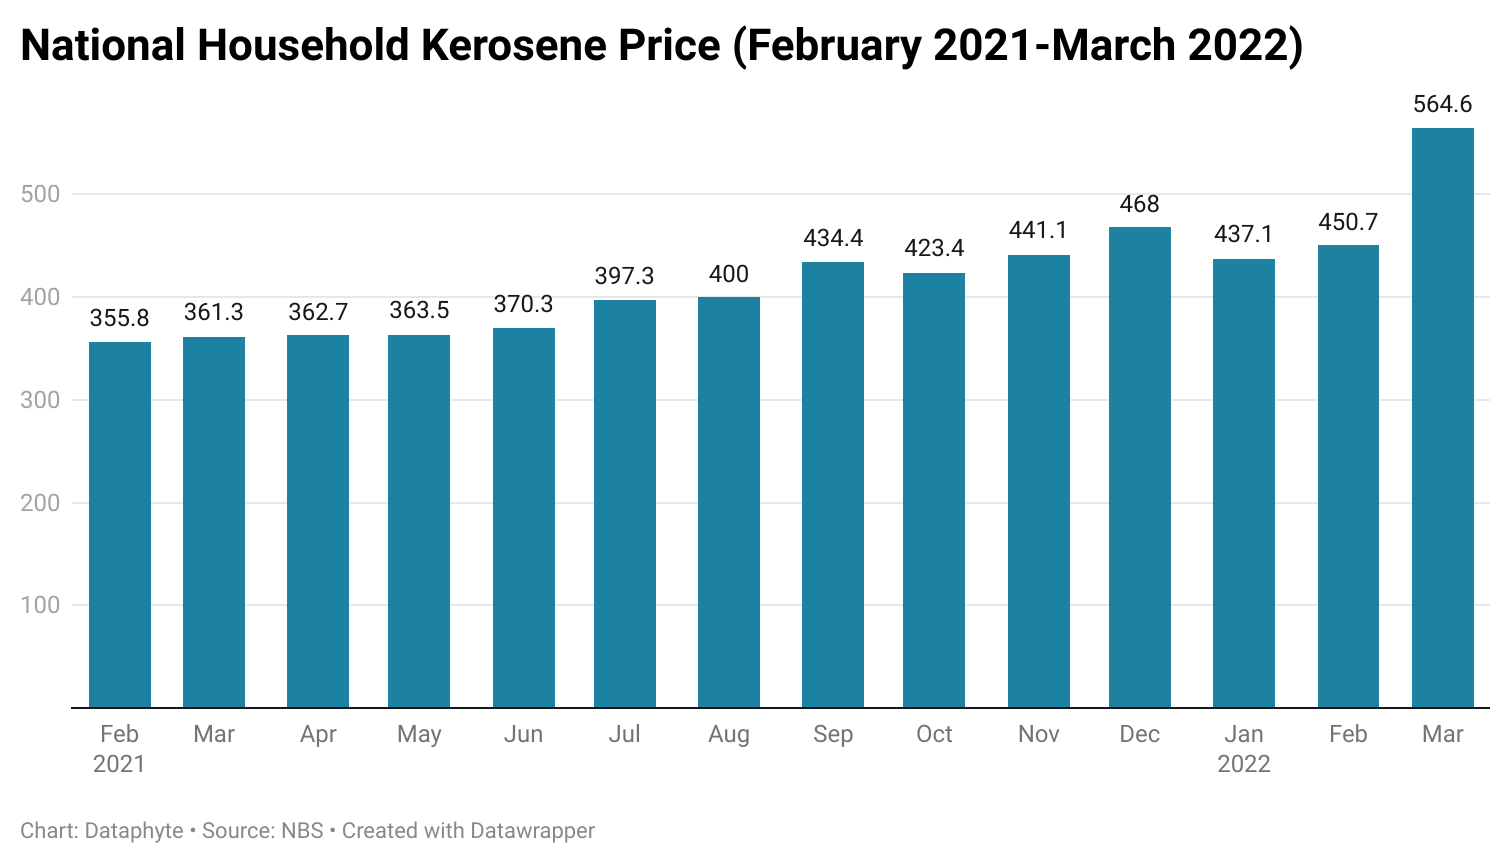 ChartoftheDay: Average Price Per Litre of Kerosene in Nigeria in March 2022  | Dataphyte